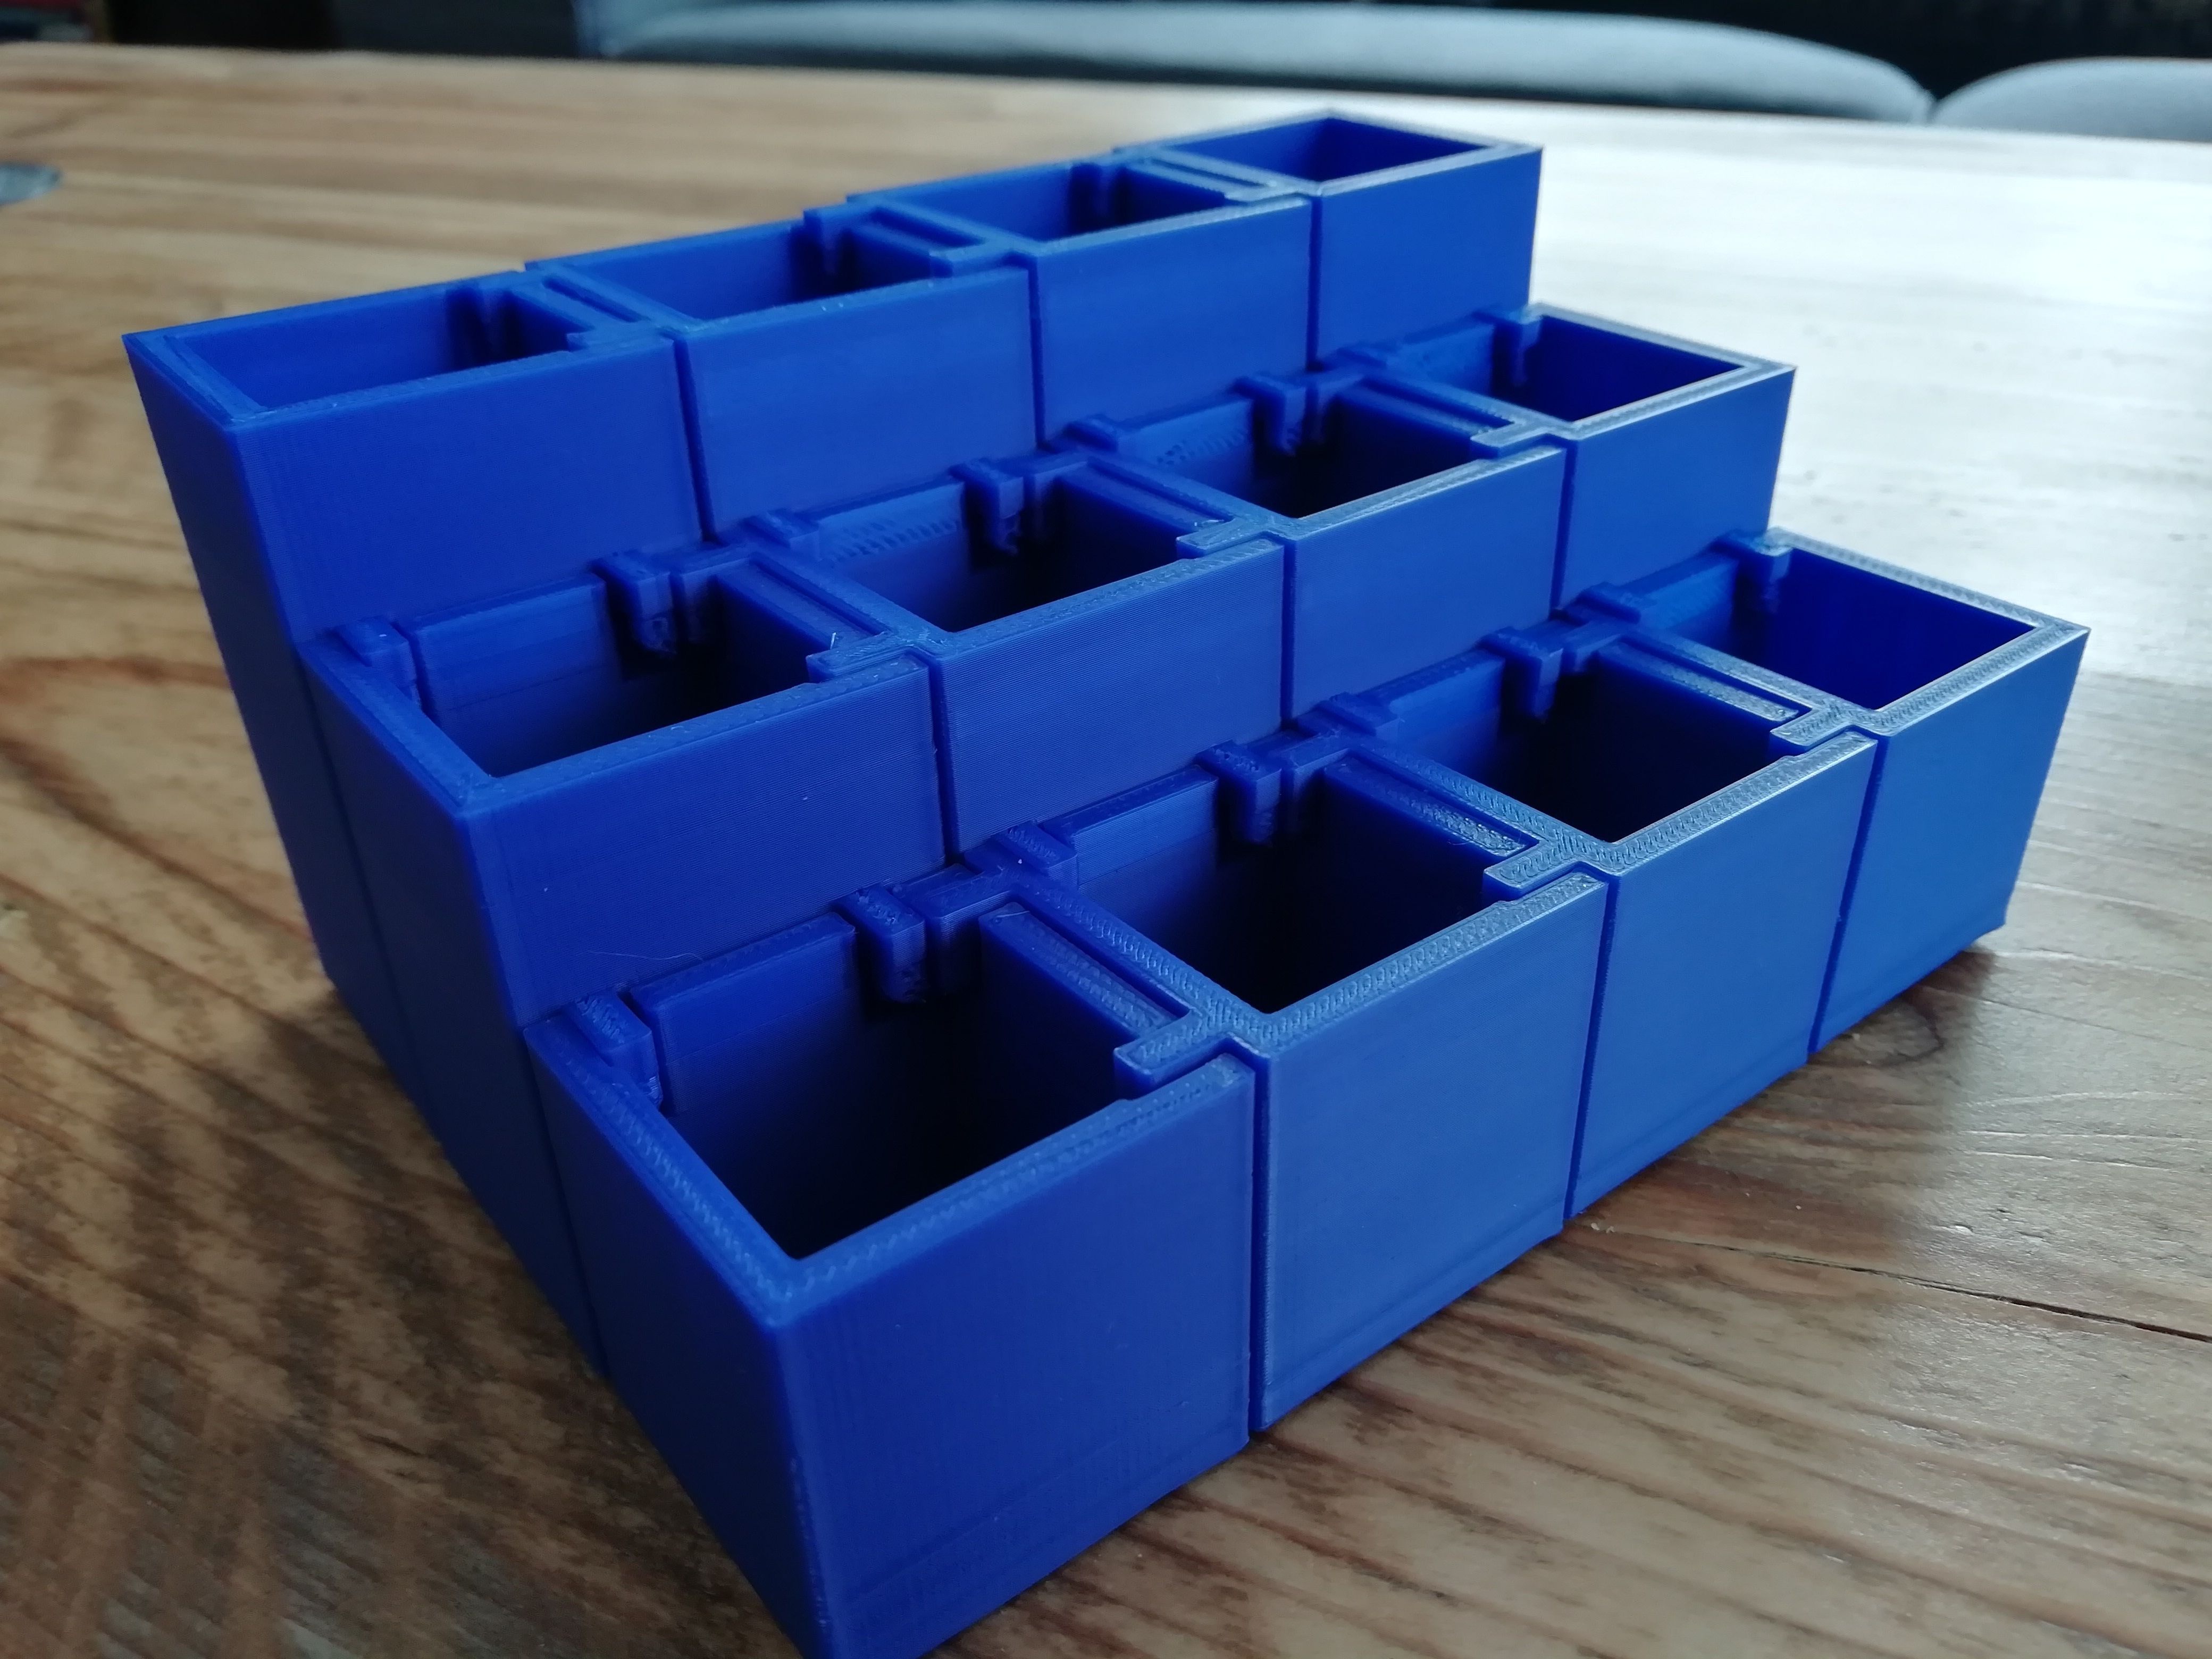 cubes_1.jpg Download STL file Make-up organizer • 3D printable template, eAgent